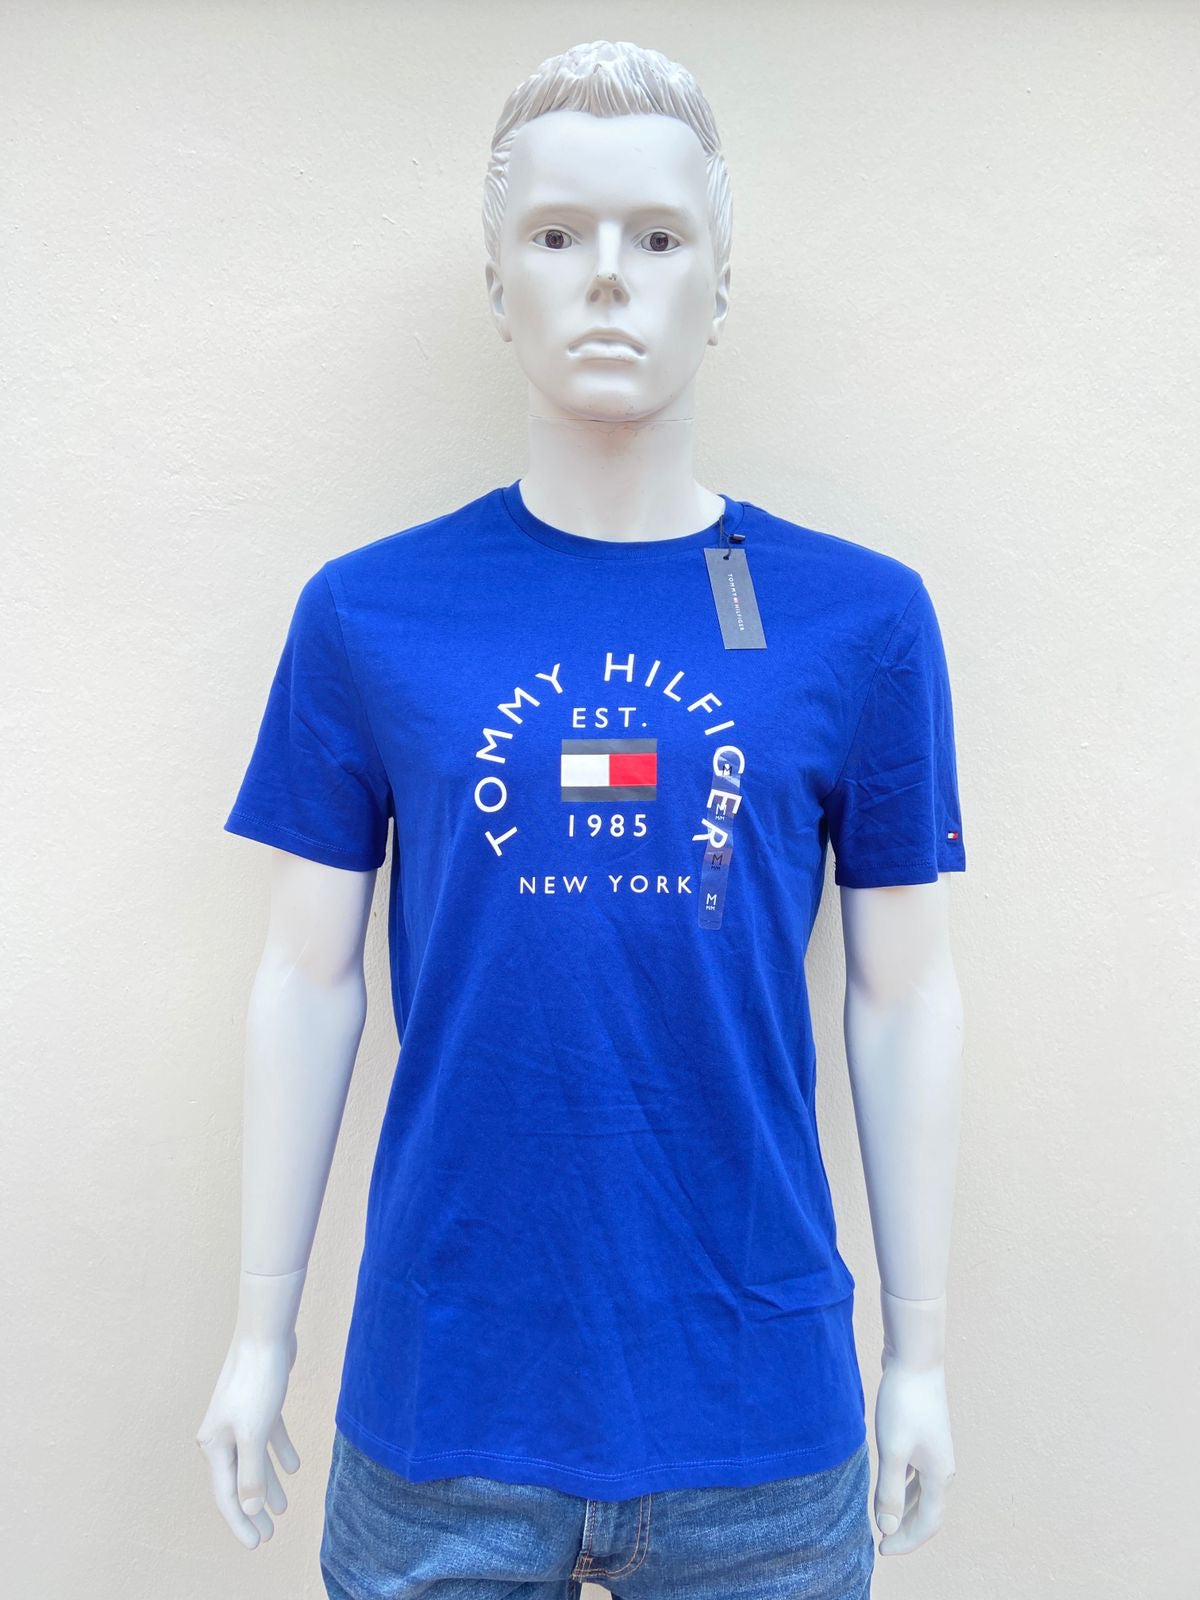 T-shirt Tommy Hilfiger Original azul oscuro con logo (Tommy Hilfiger 1985, New York).